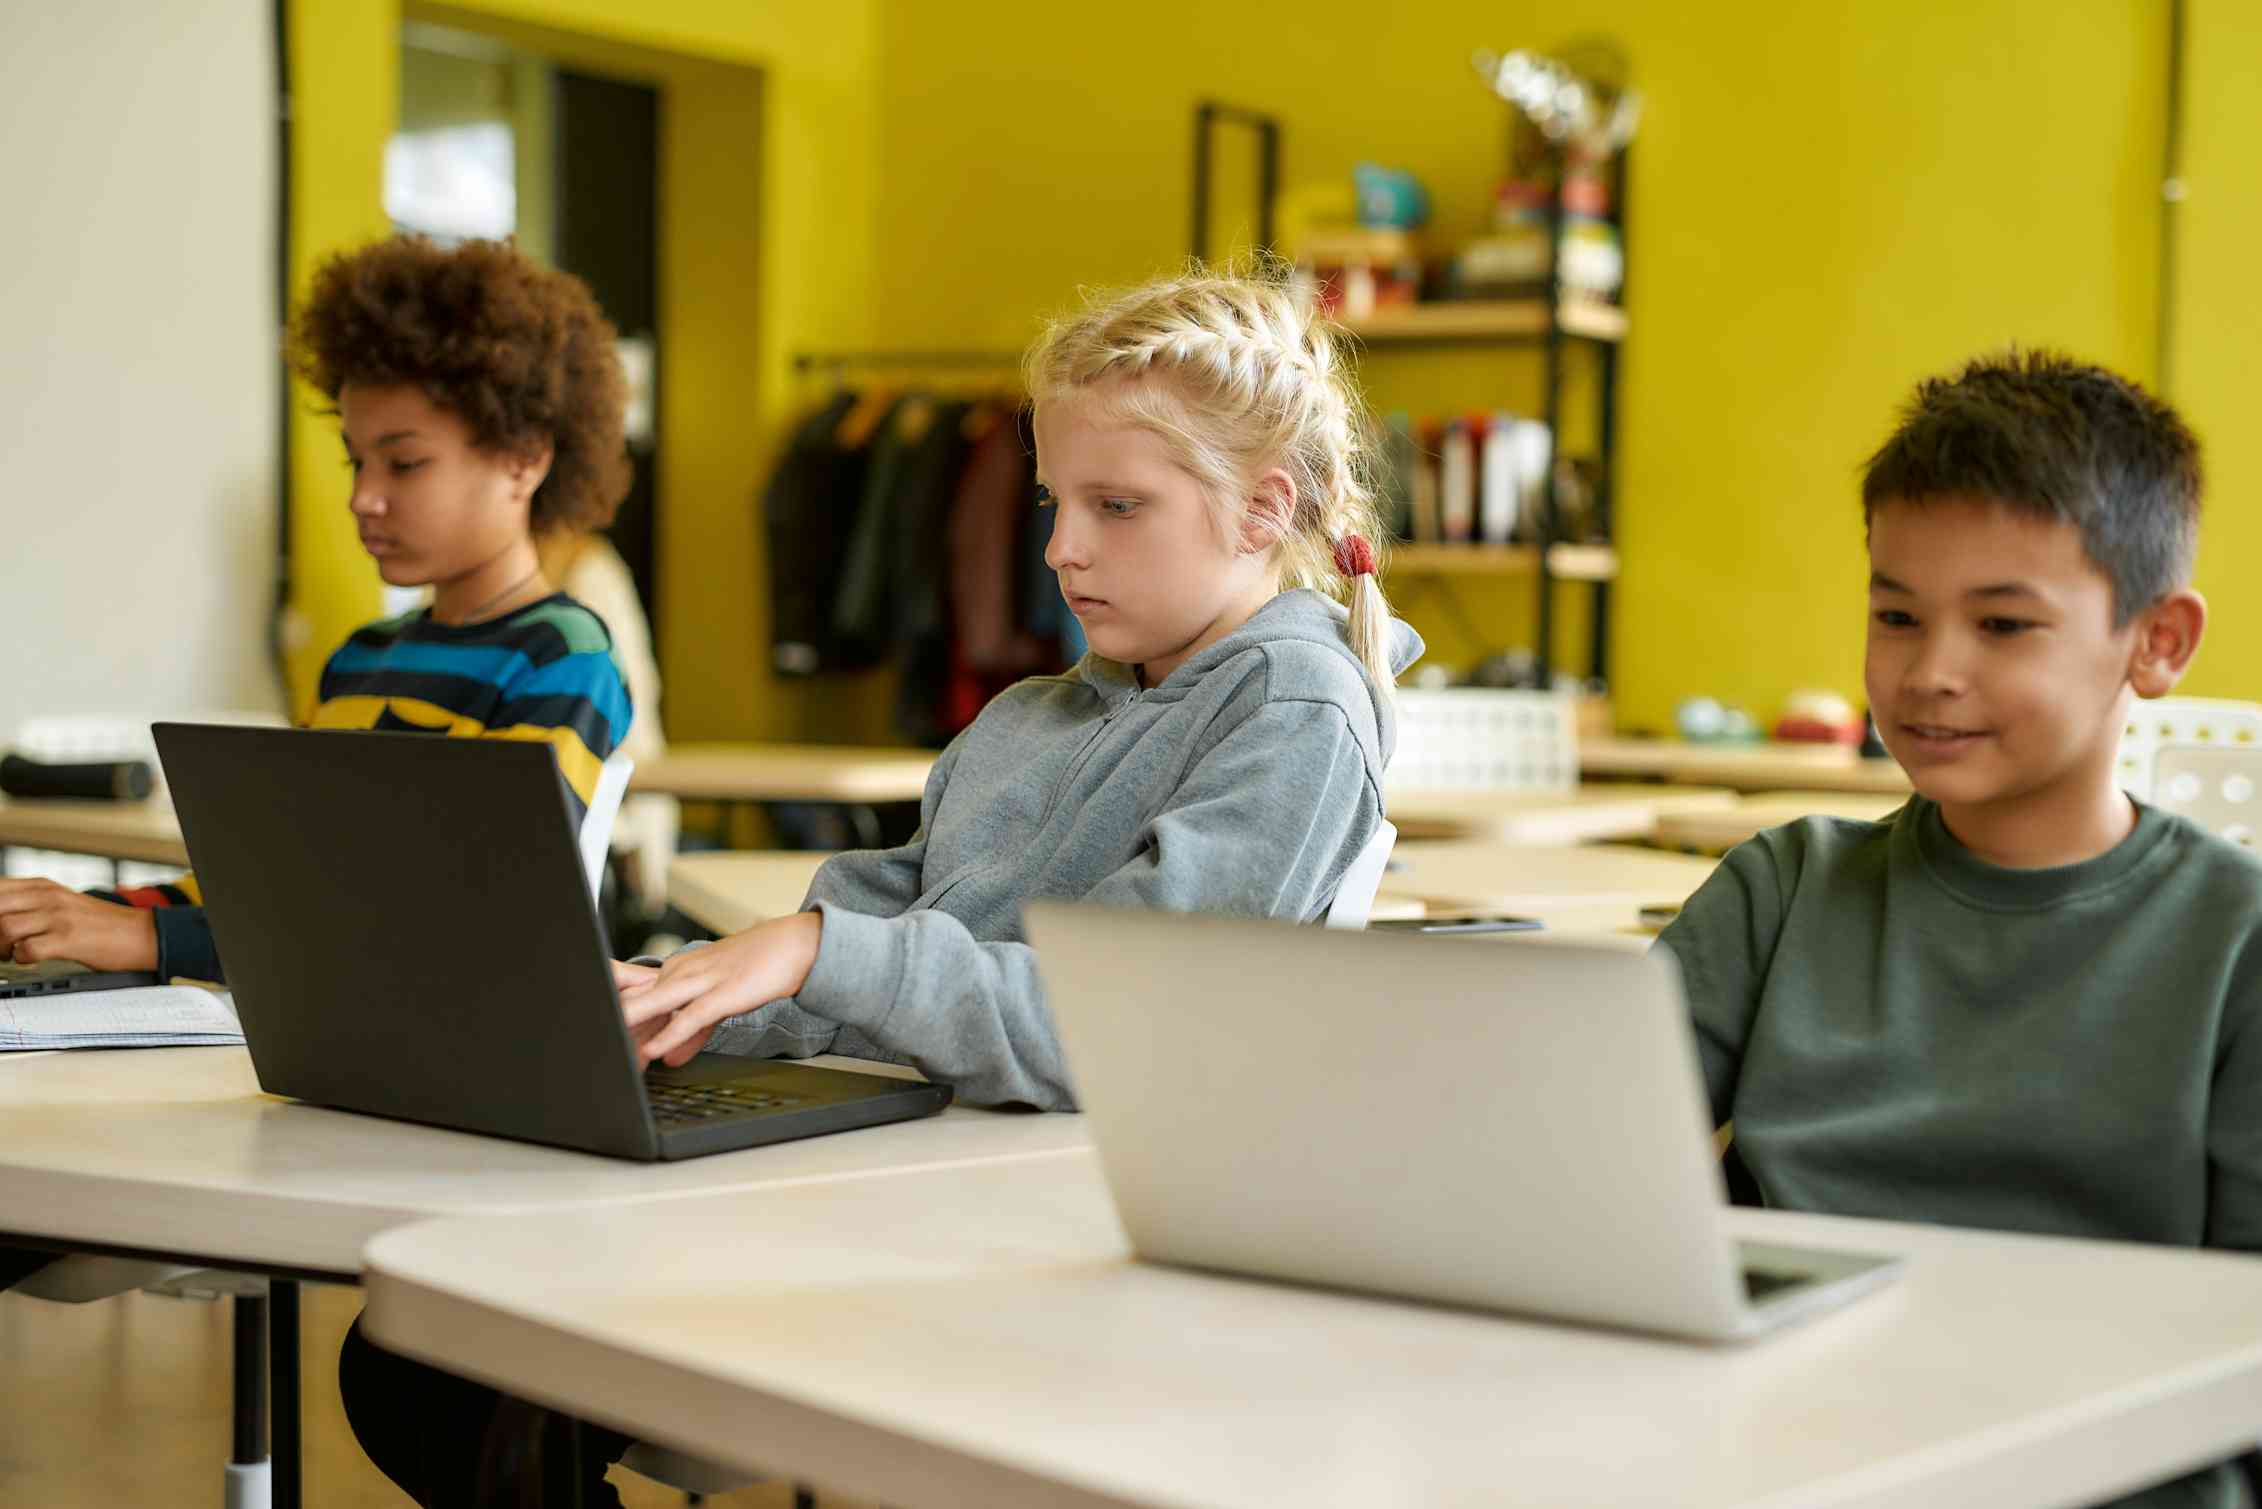 Children are seen at desks working on laptops.